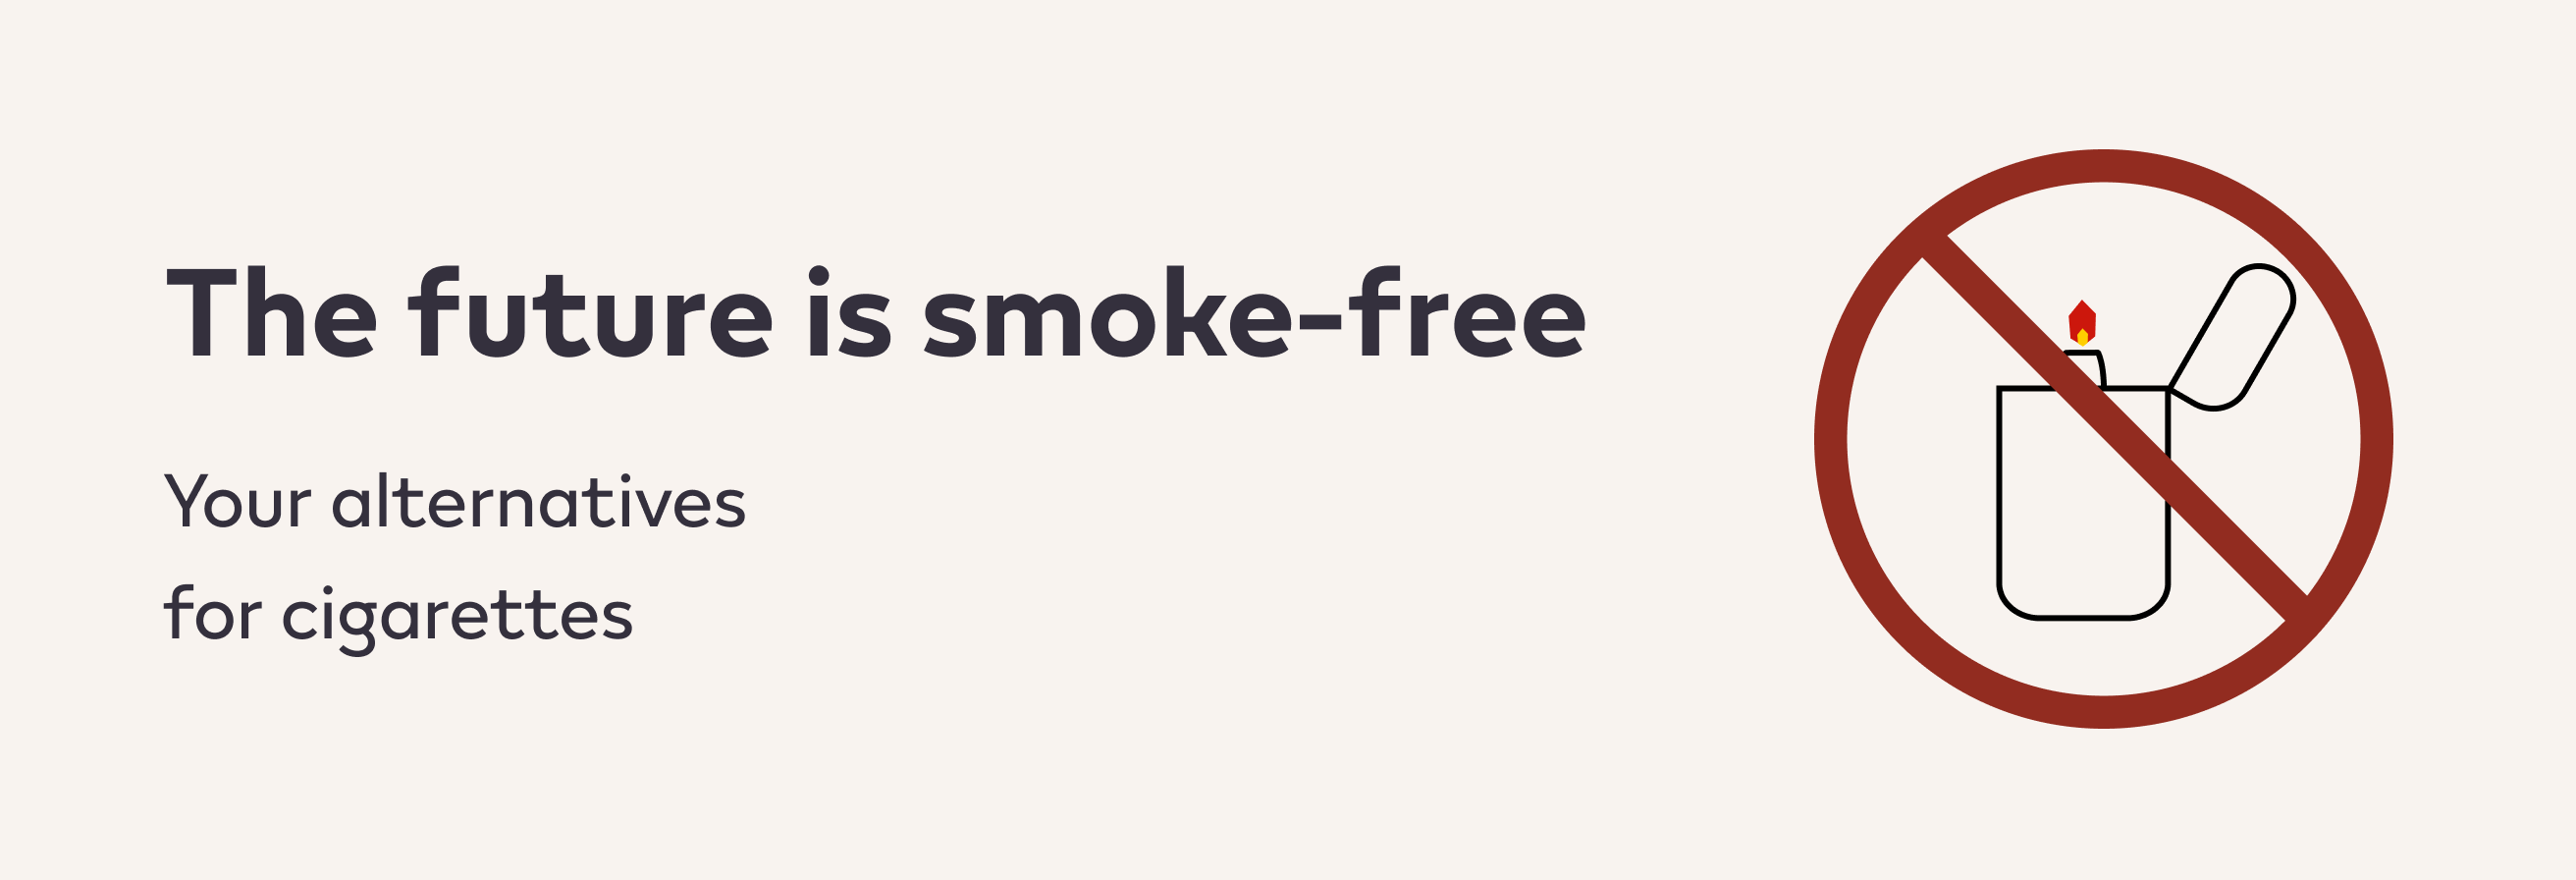 The future is smoke-free